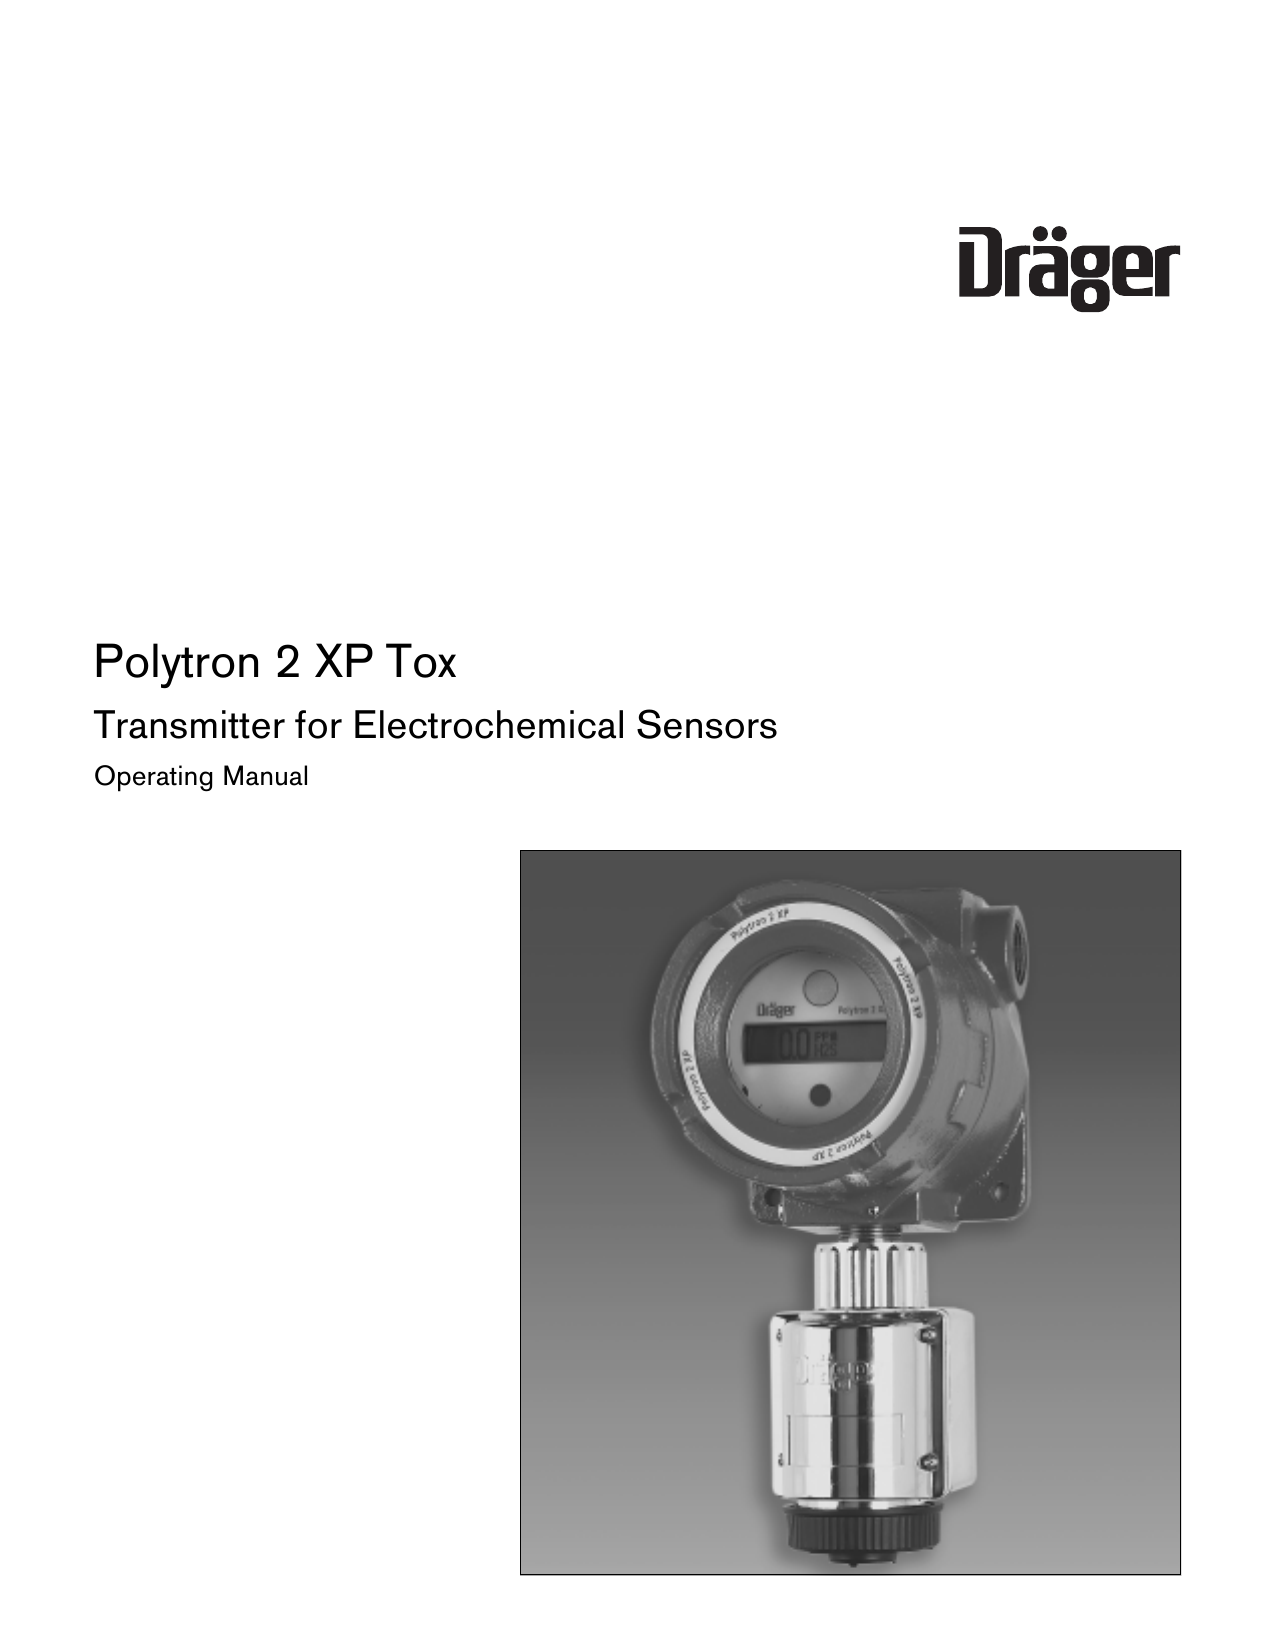 Dräger Polytron 2 XP Tox Operating Manual